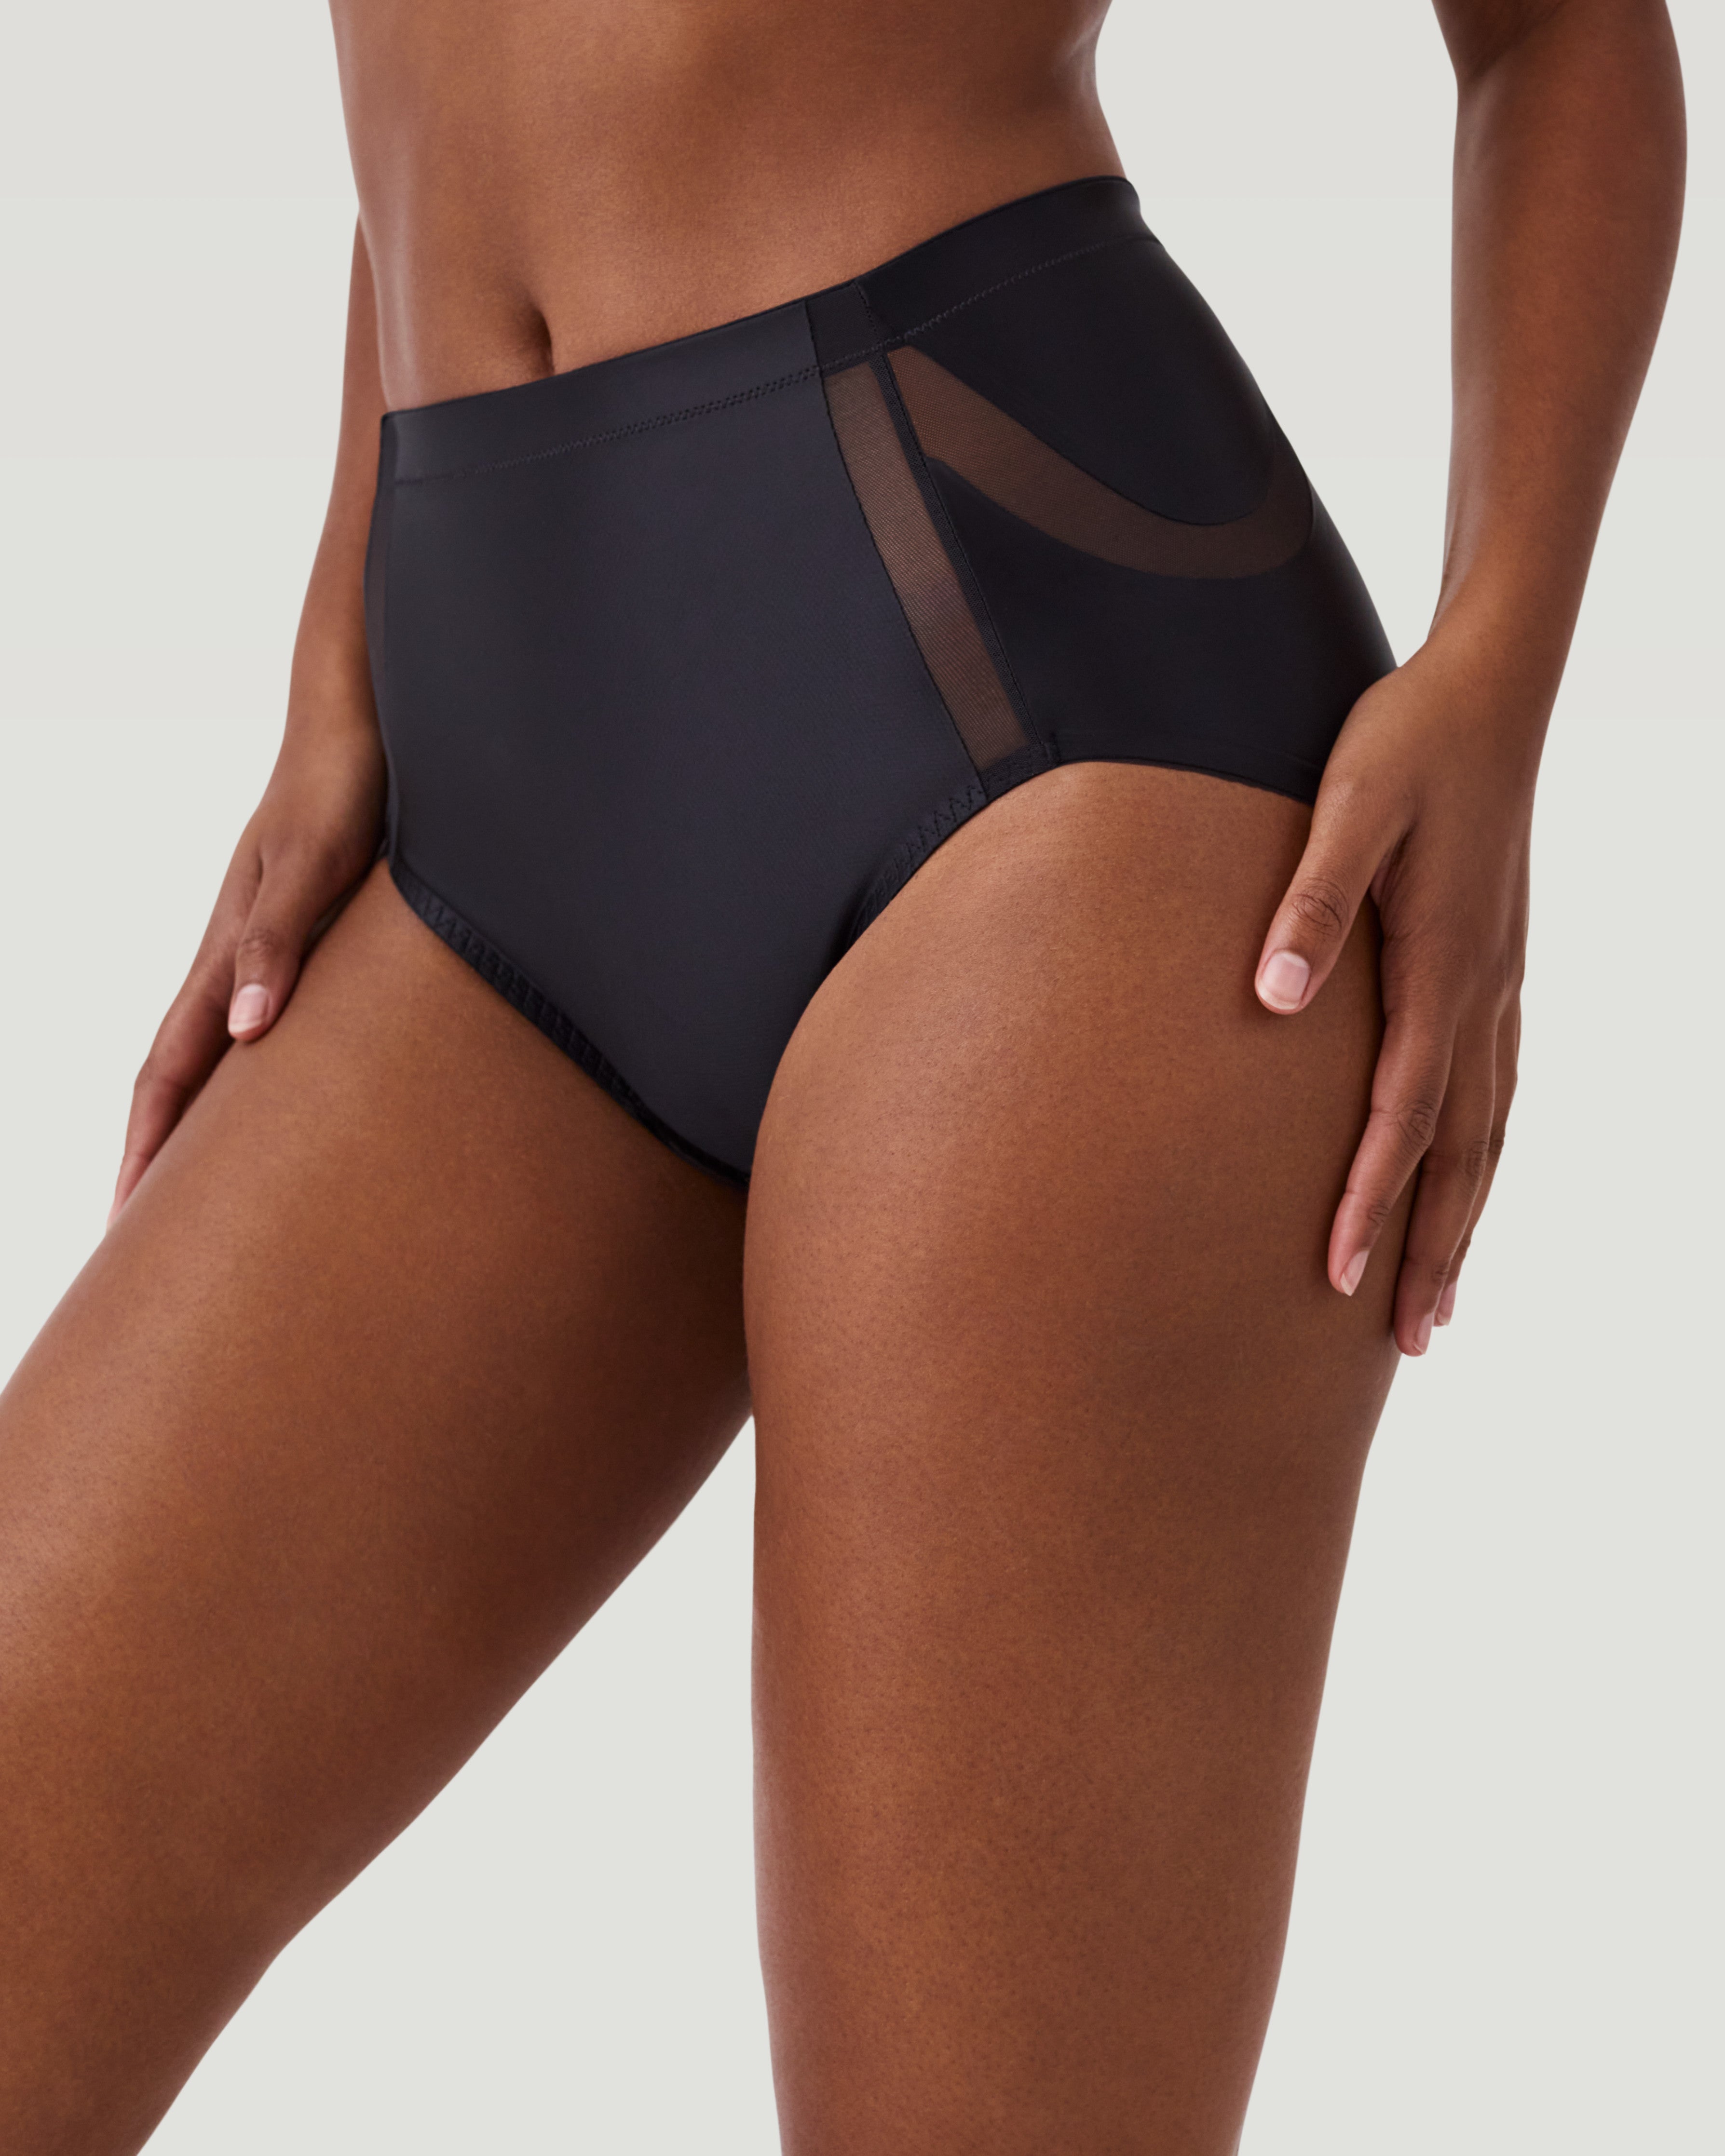 MITSICO Mesh Leaking Buttocks Panties Butt-Lifting Body Pants